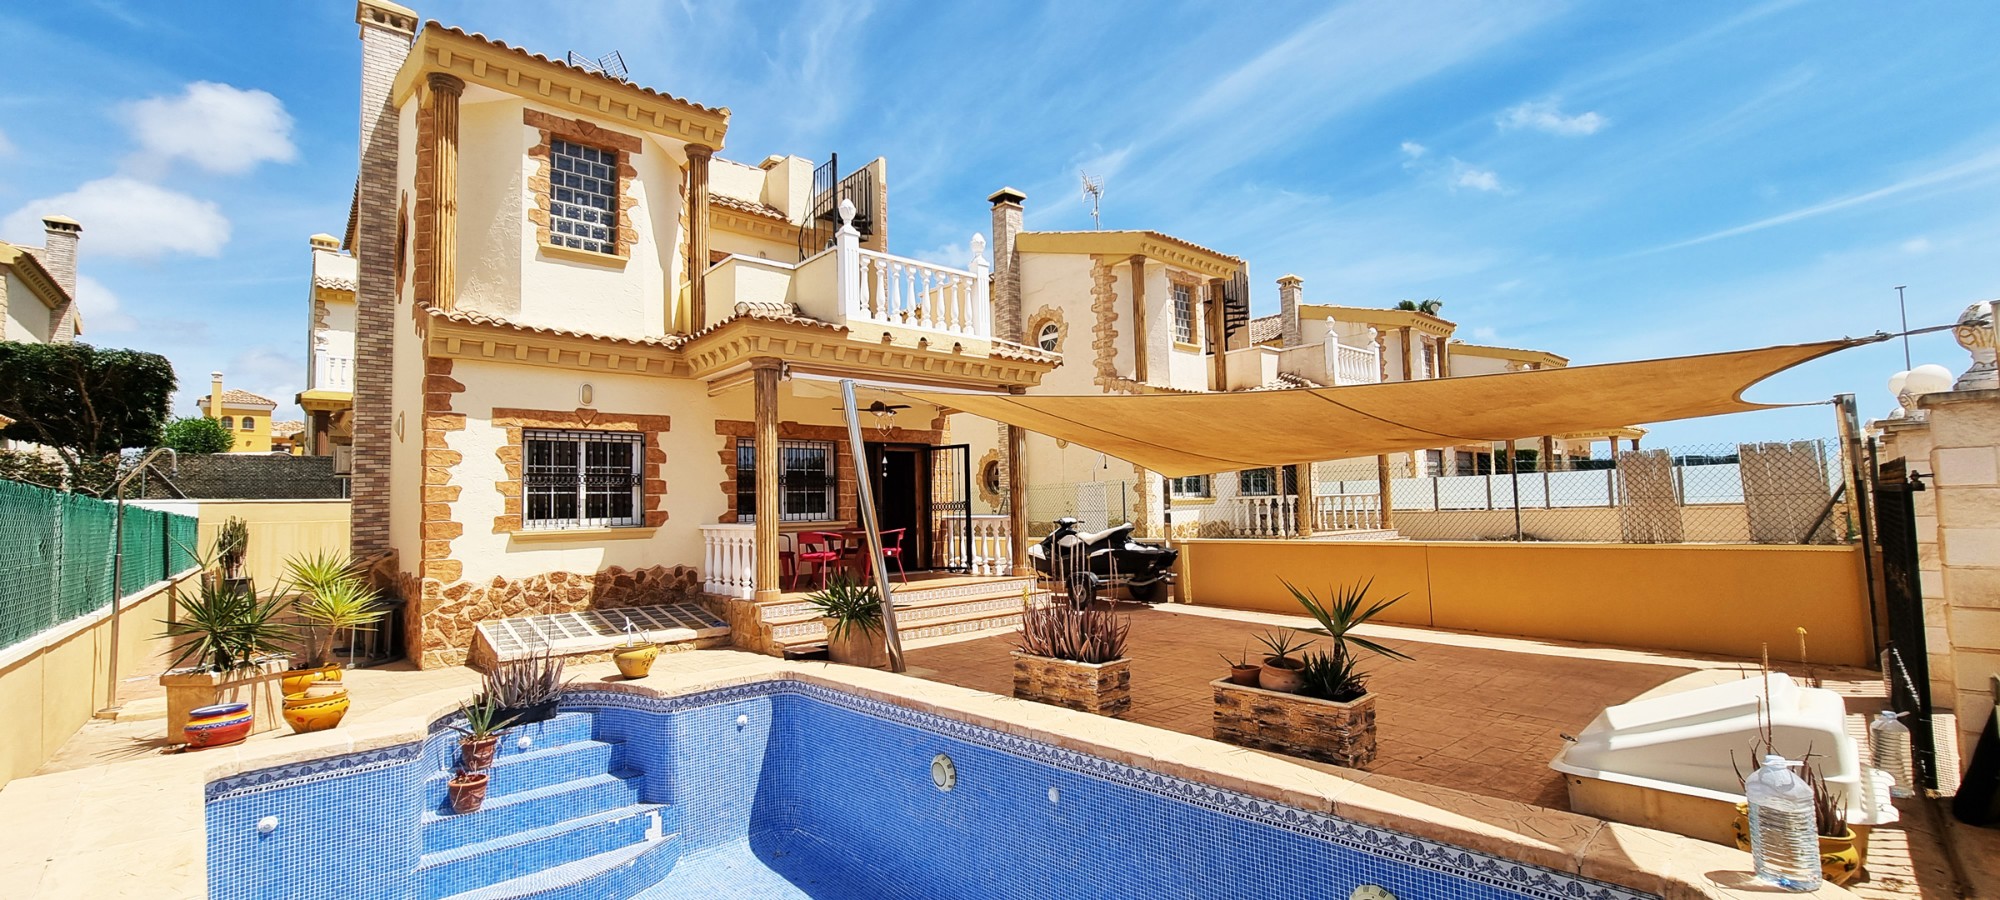 3 bedroom house / villa for sale in Guardamar del Segura, Costa Blanca